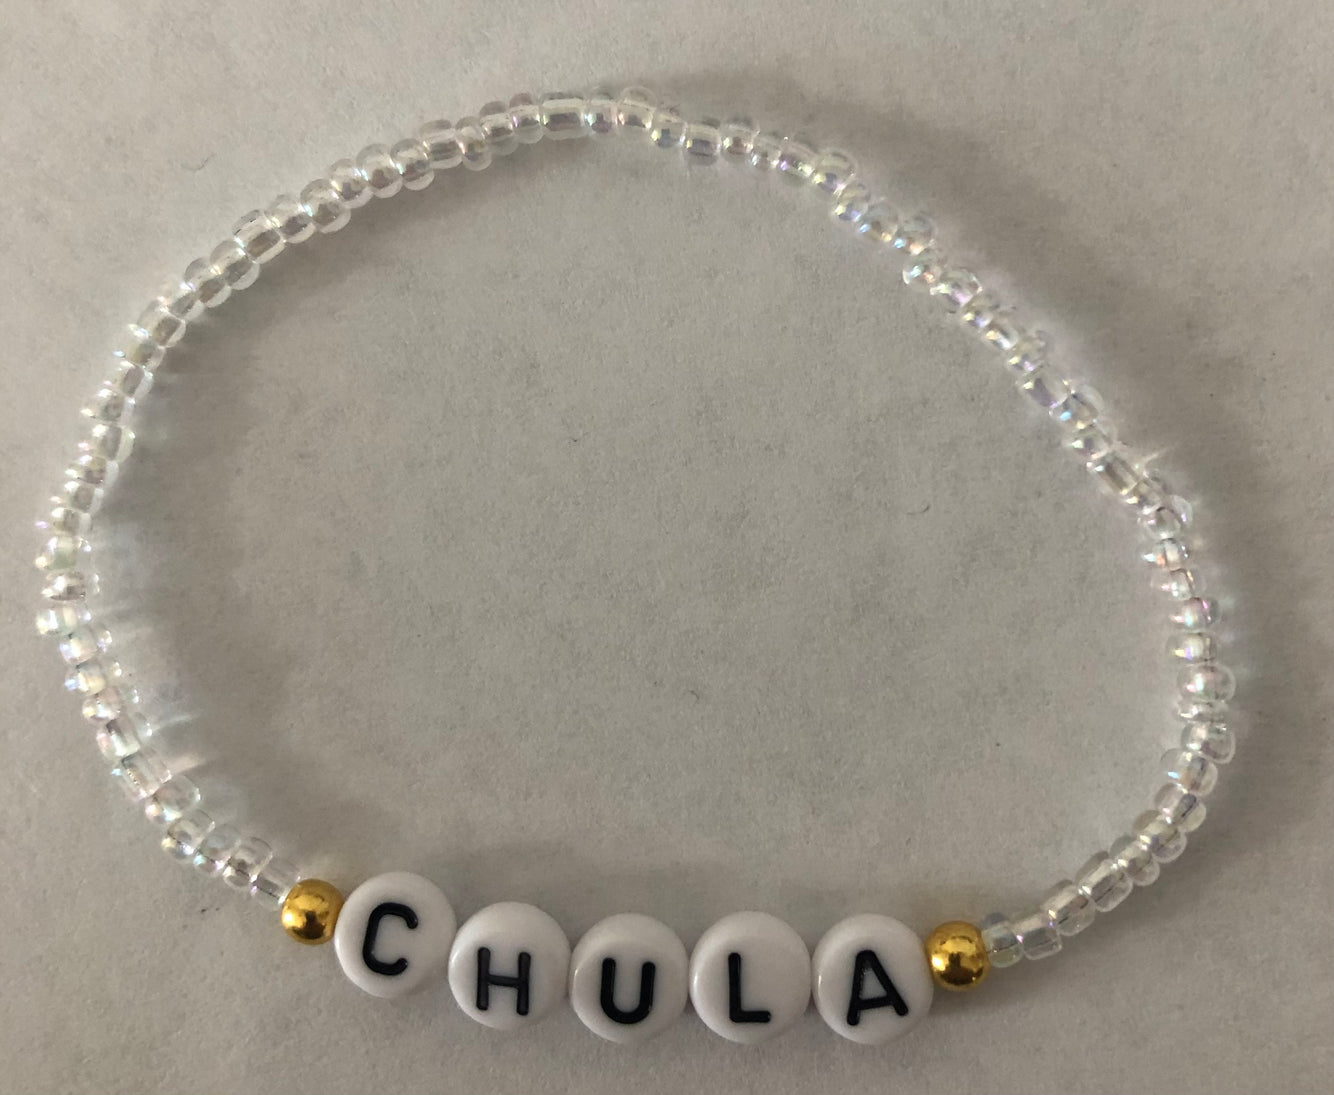 Chula empowering bracelet